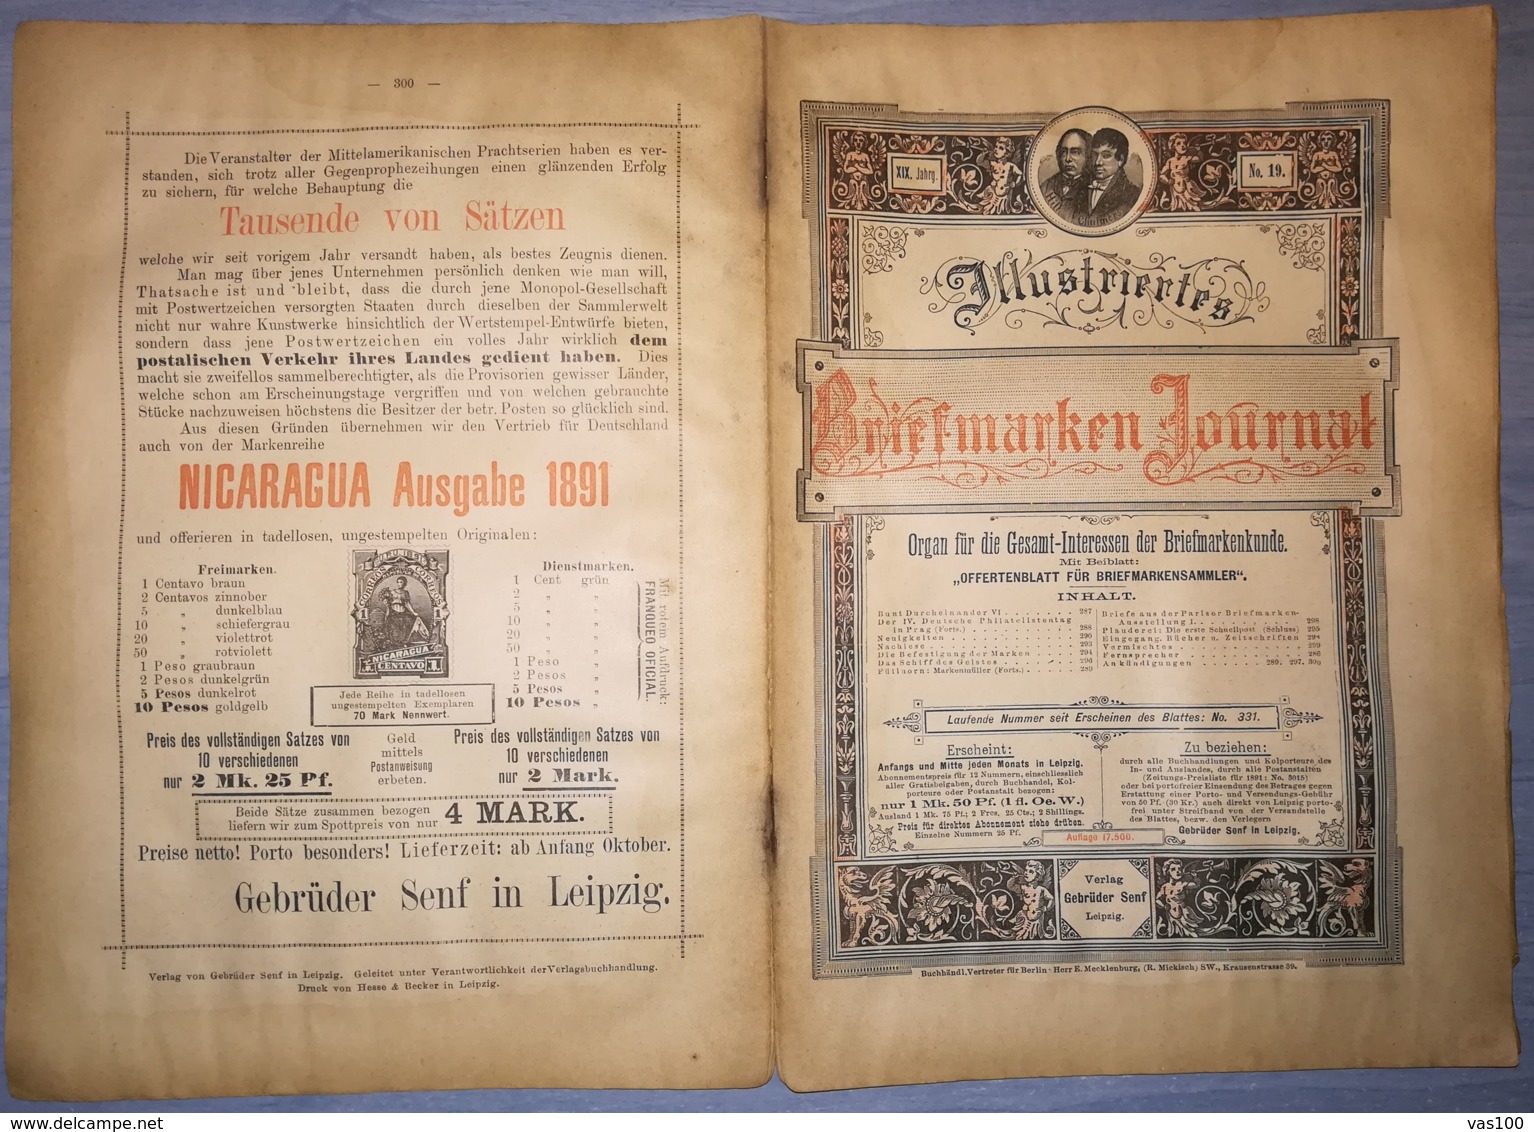 ILLUSTRATED STAMPS JOURNAL- ILLUSTRIERTES BRIEFMARKEN JOURNAL MAGAZINE, LEIPZIG, NR 19, OCTOBER 1892, GERMANY - Allemand (jusque 1940)